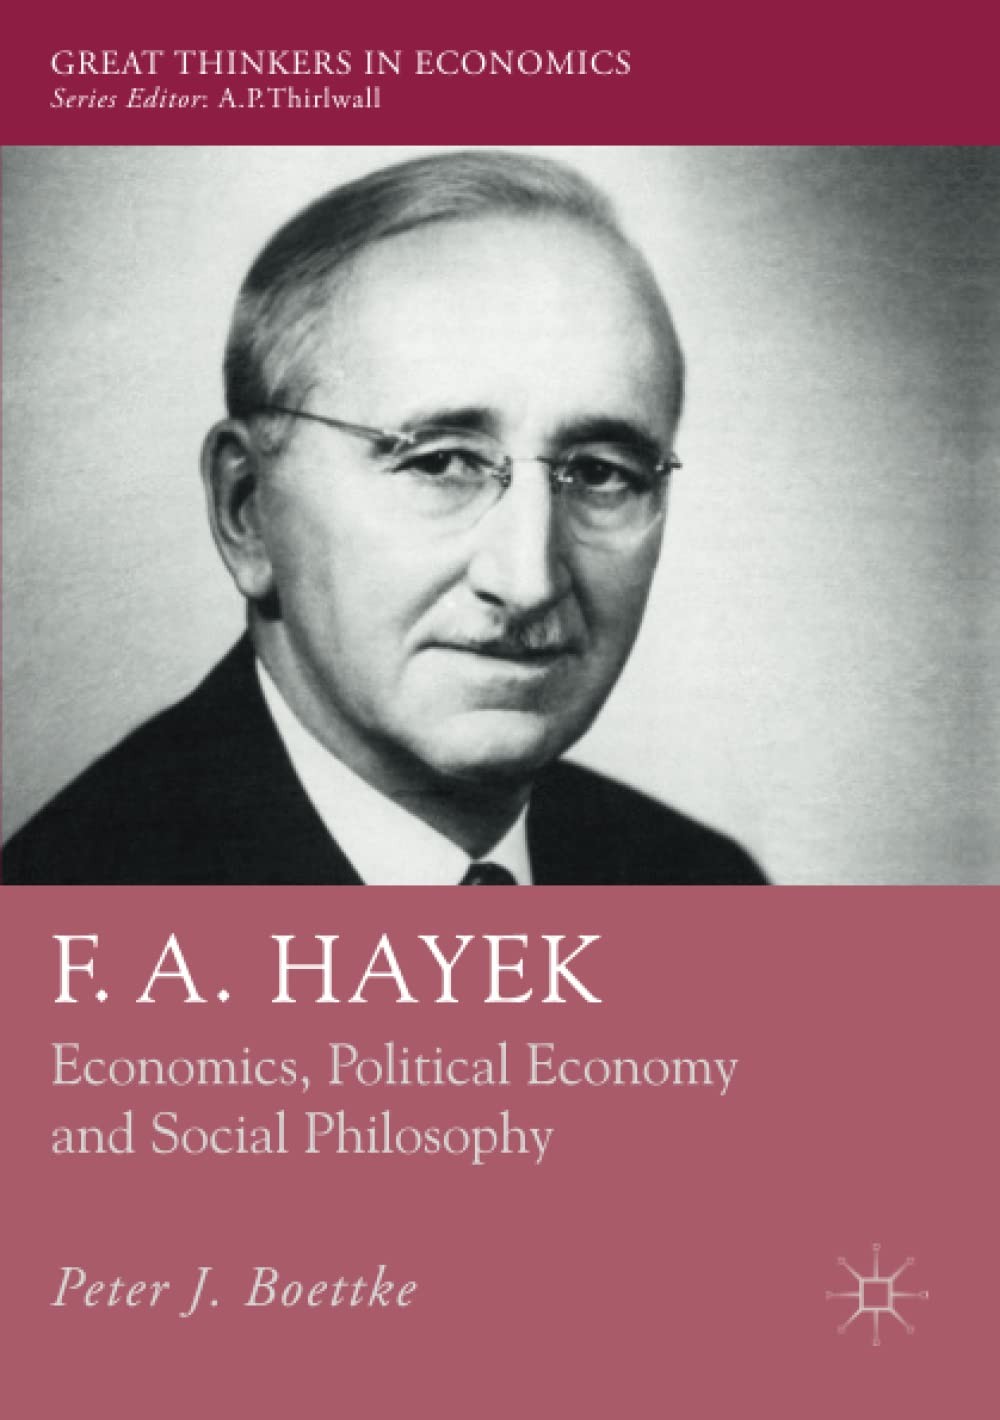 Economics, Political Economy and Social Philosophy